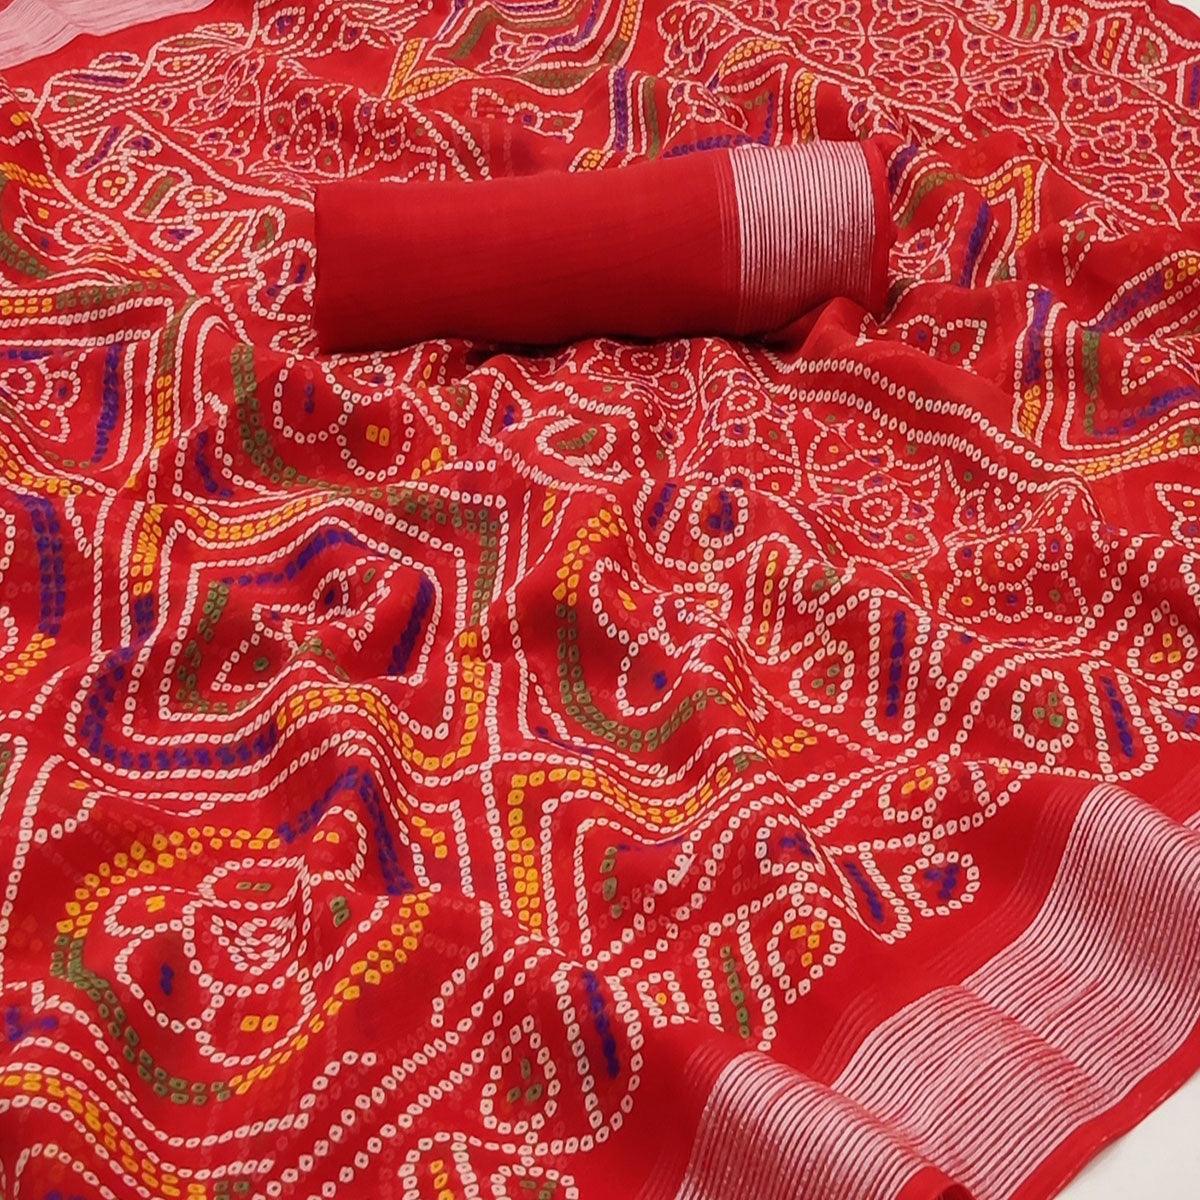 Red Casual Wear Bandhani Printed Chiffon Saree - Peachmode